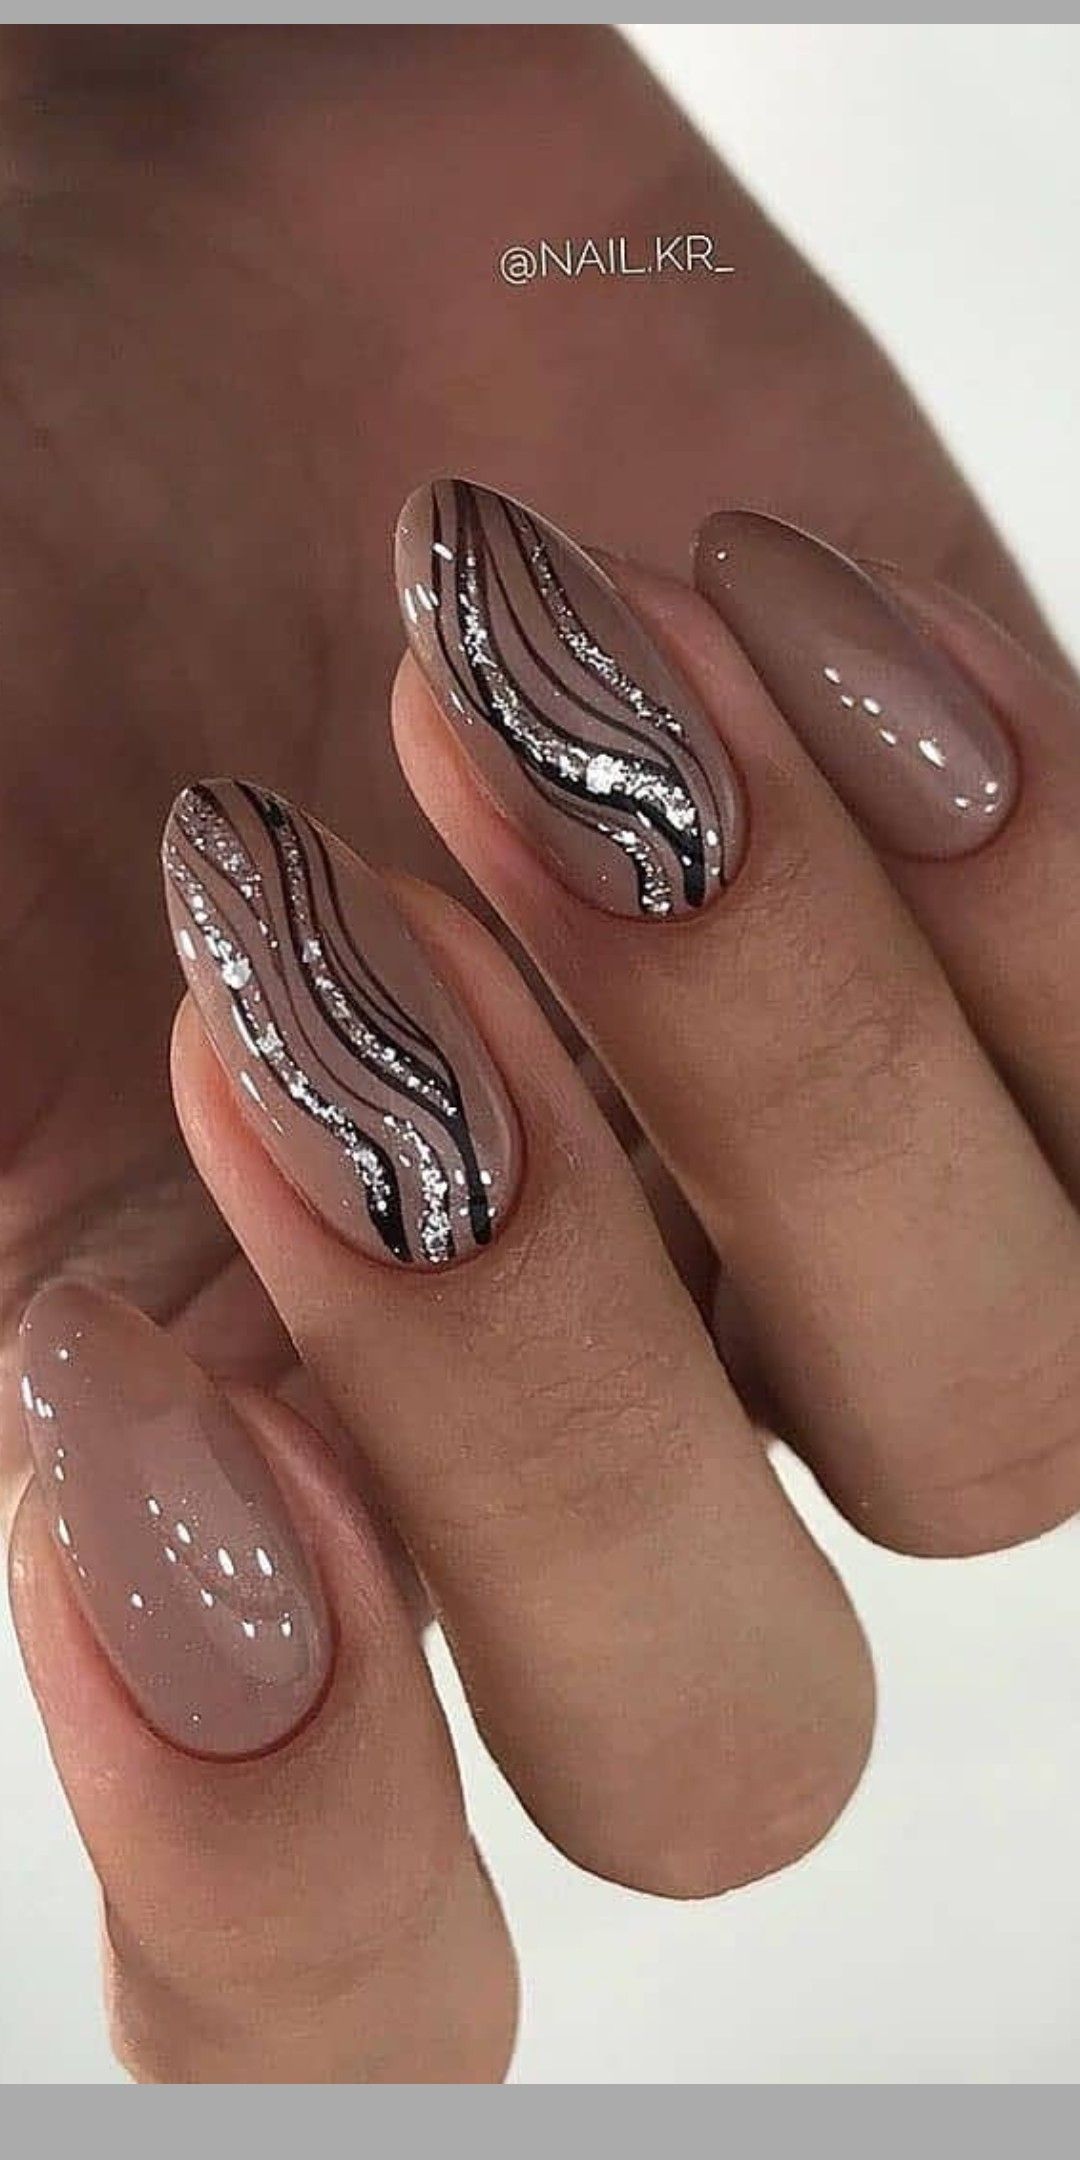 Pin By Irina Zhukovska On Manikyur In 2020 Pretty Nail Art Designs Nail Designs Nail Manicure